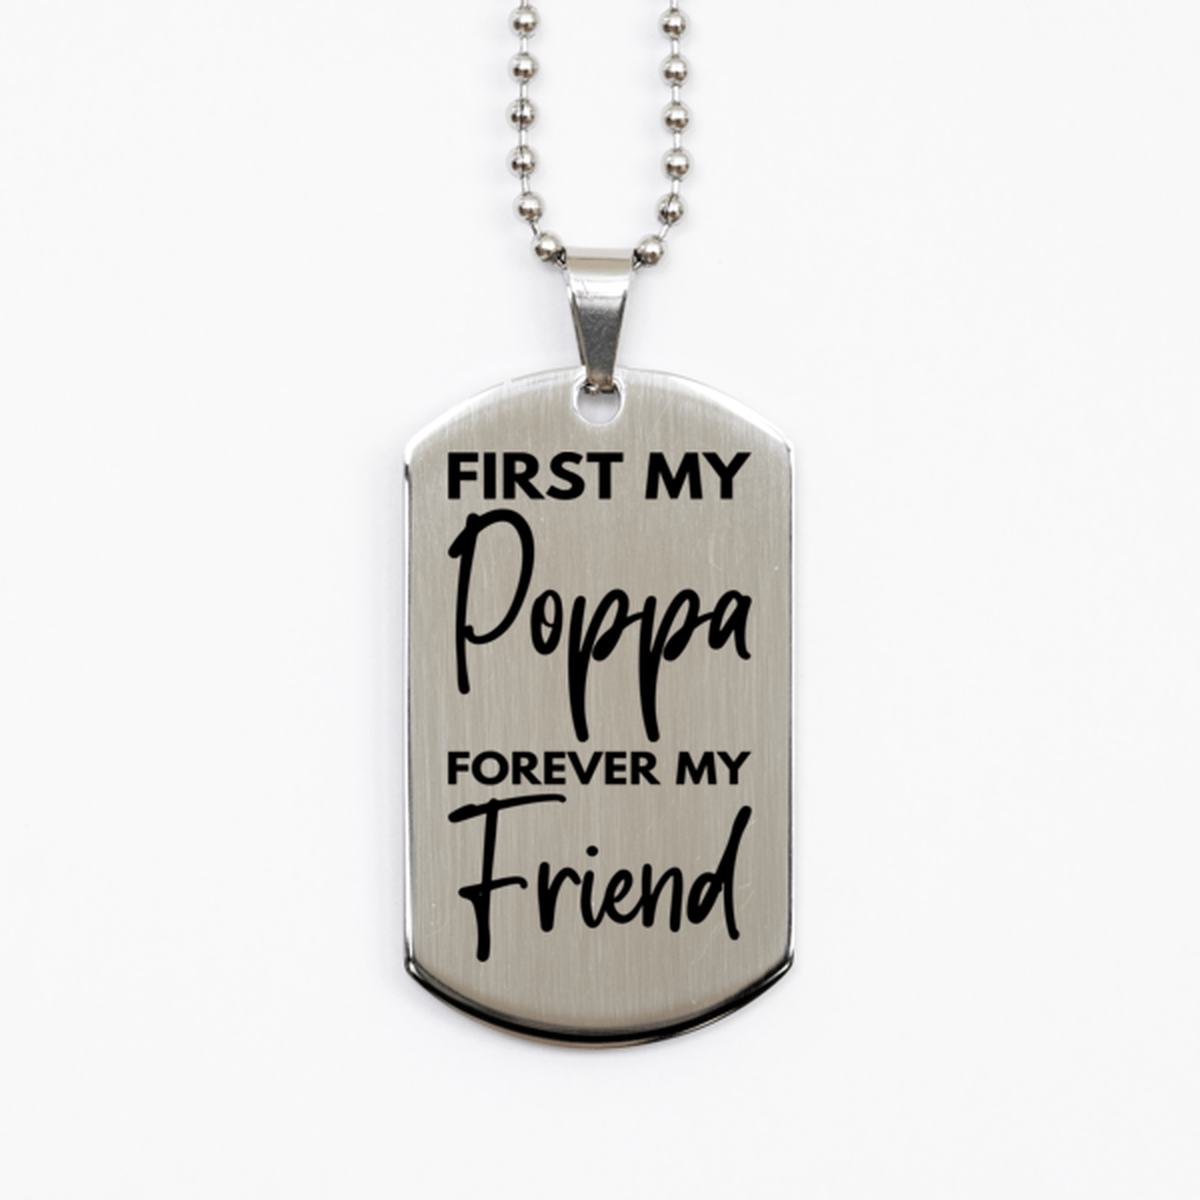 Inspirational Poppa Silver Dog Tag Necklace, First My Poppa Forever My Friend, Best Birthday Gifts for Poppa